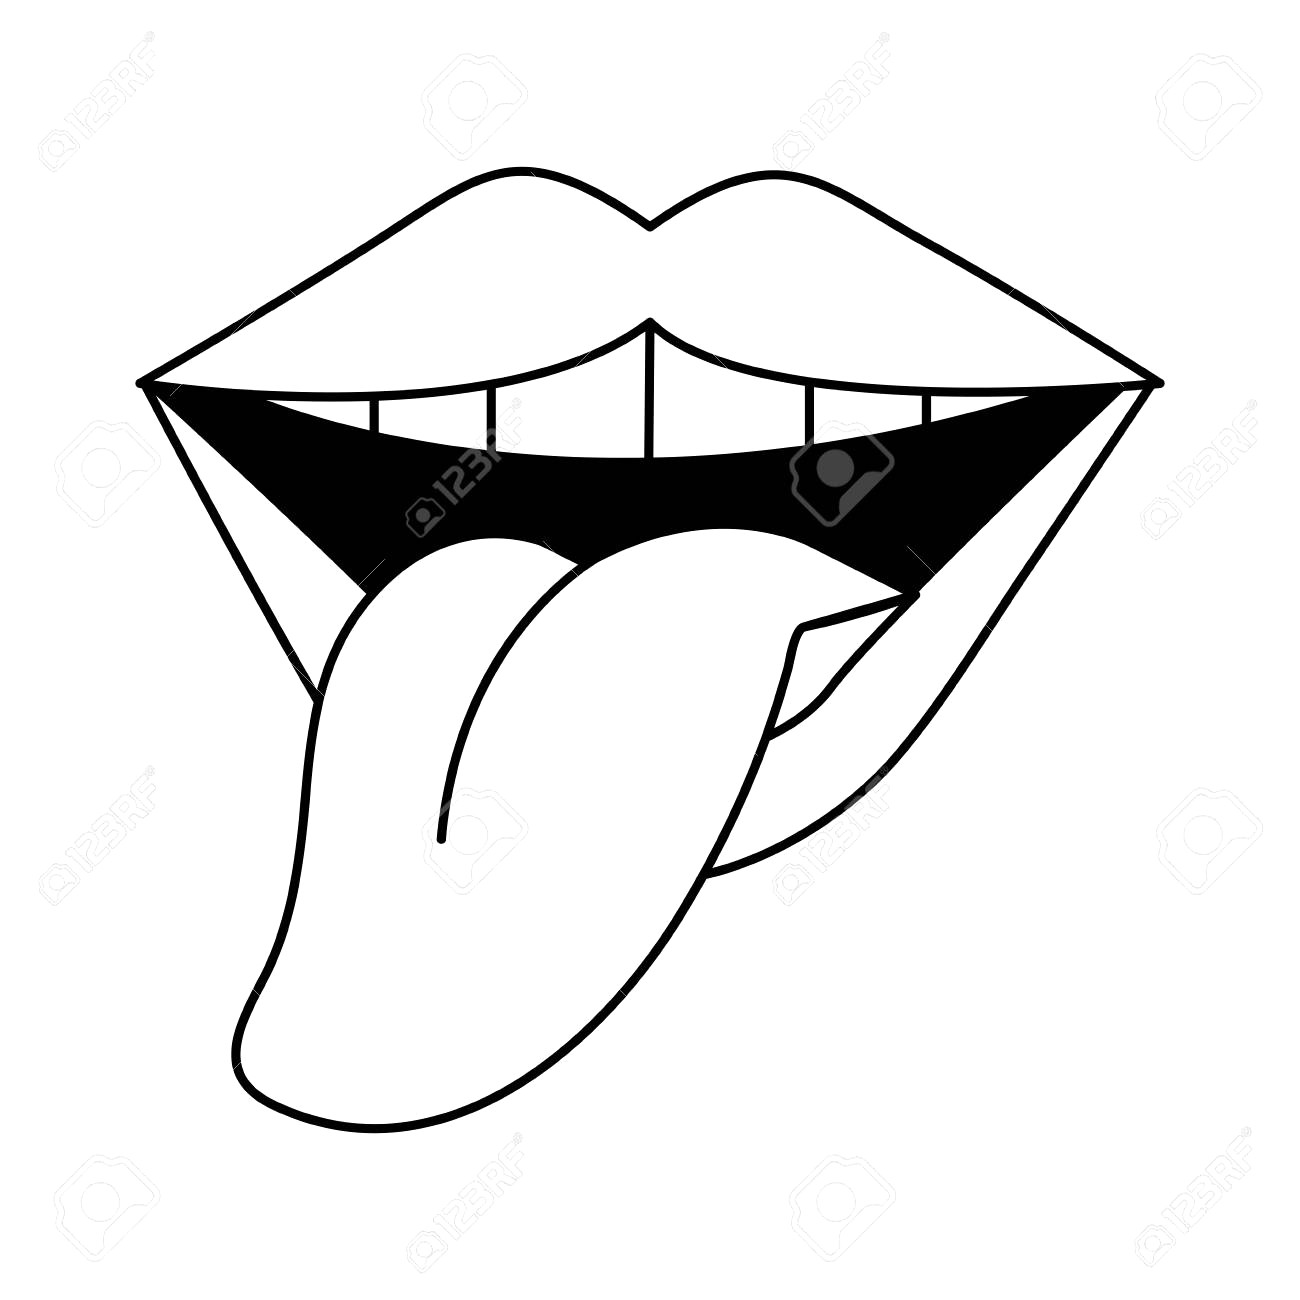 Tongue out drawing.